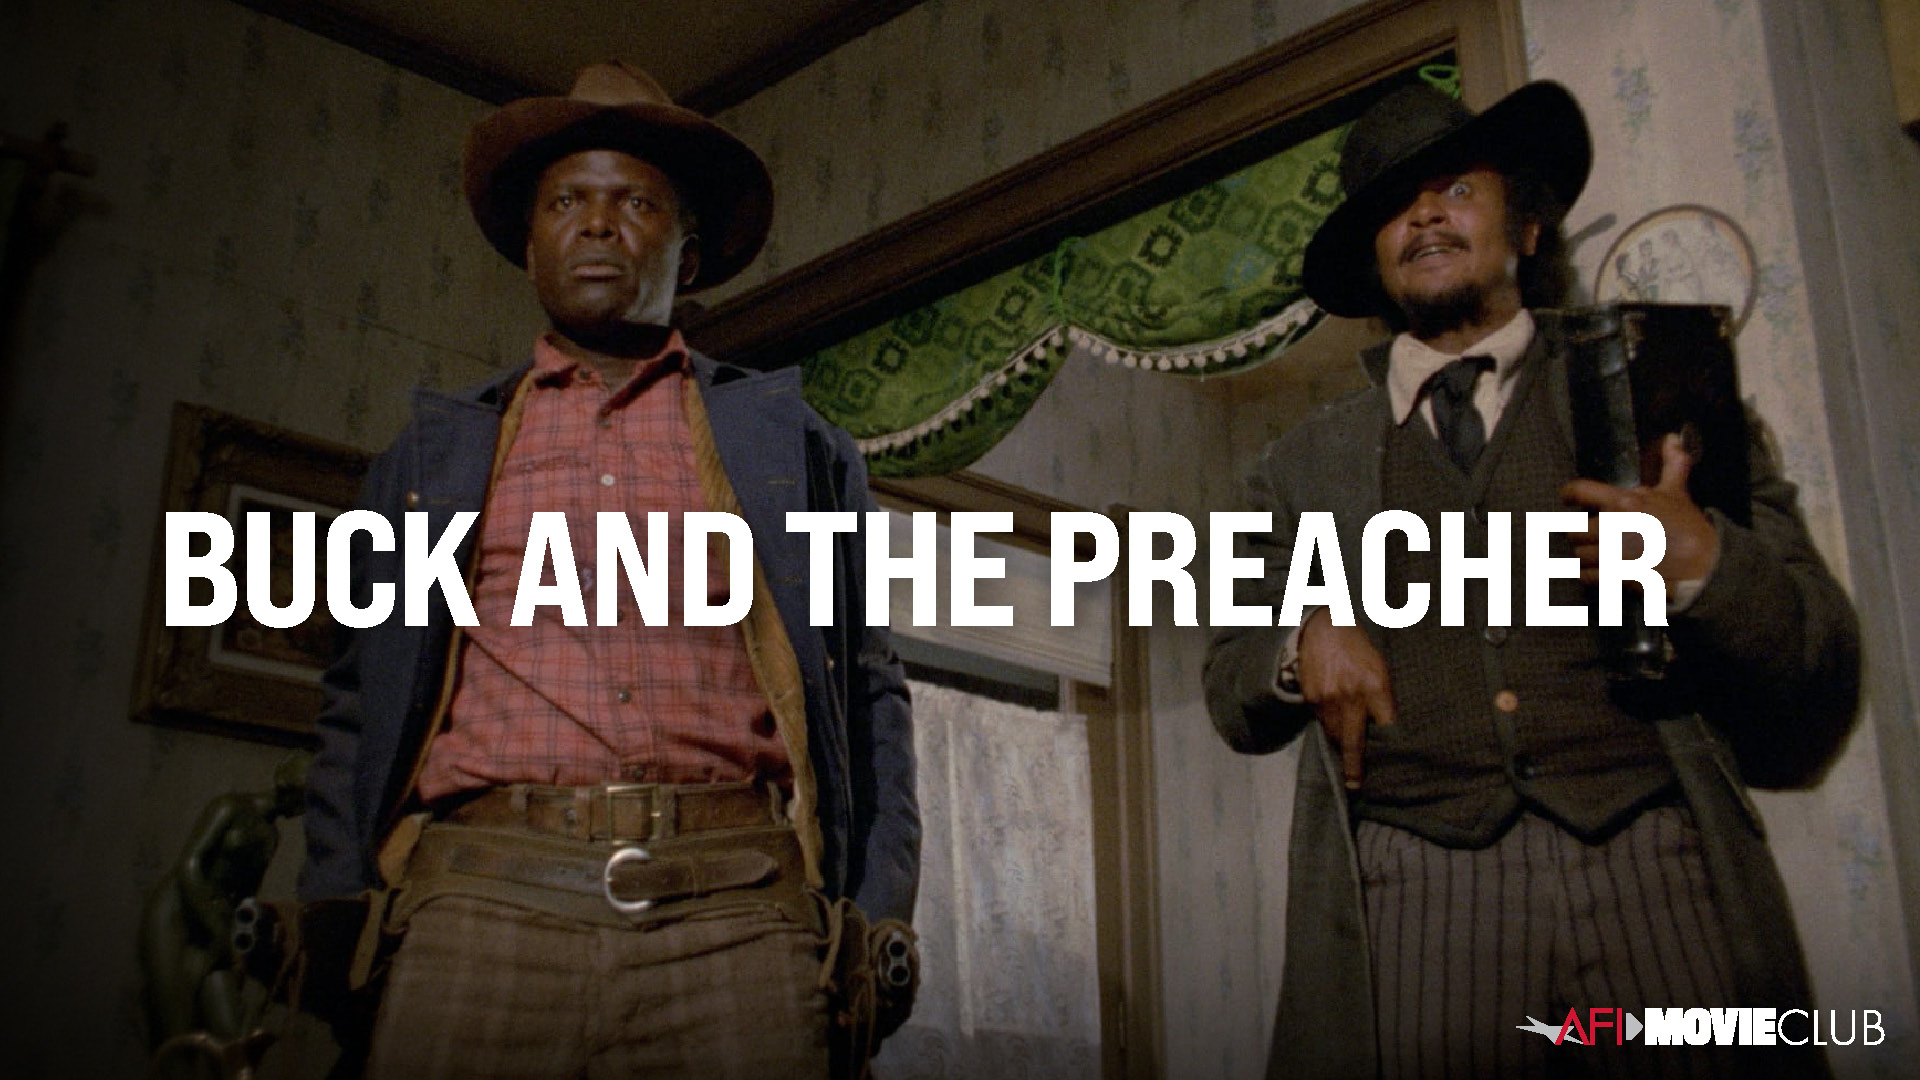 Buck and the Preacher Film Still - Harry Belafonte and Sidney Poitier